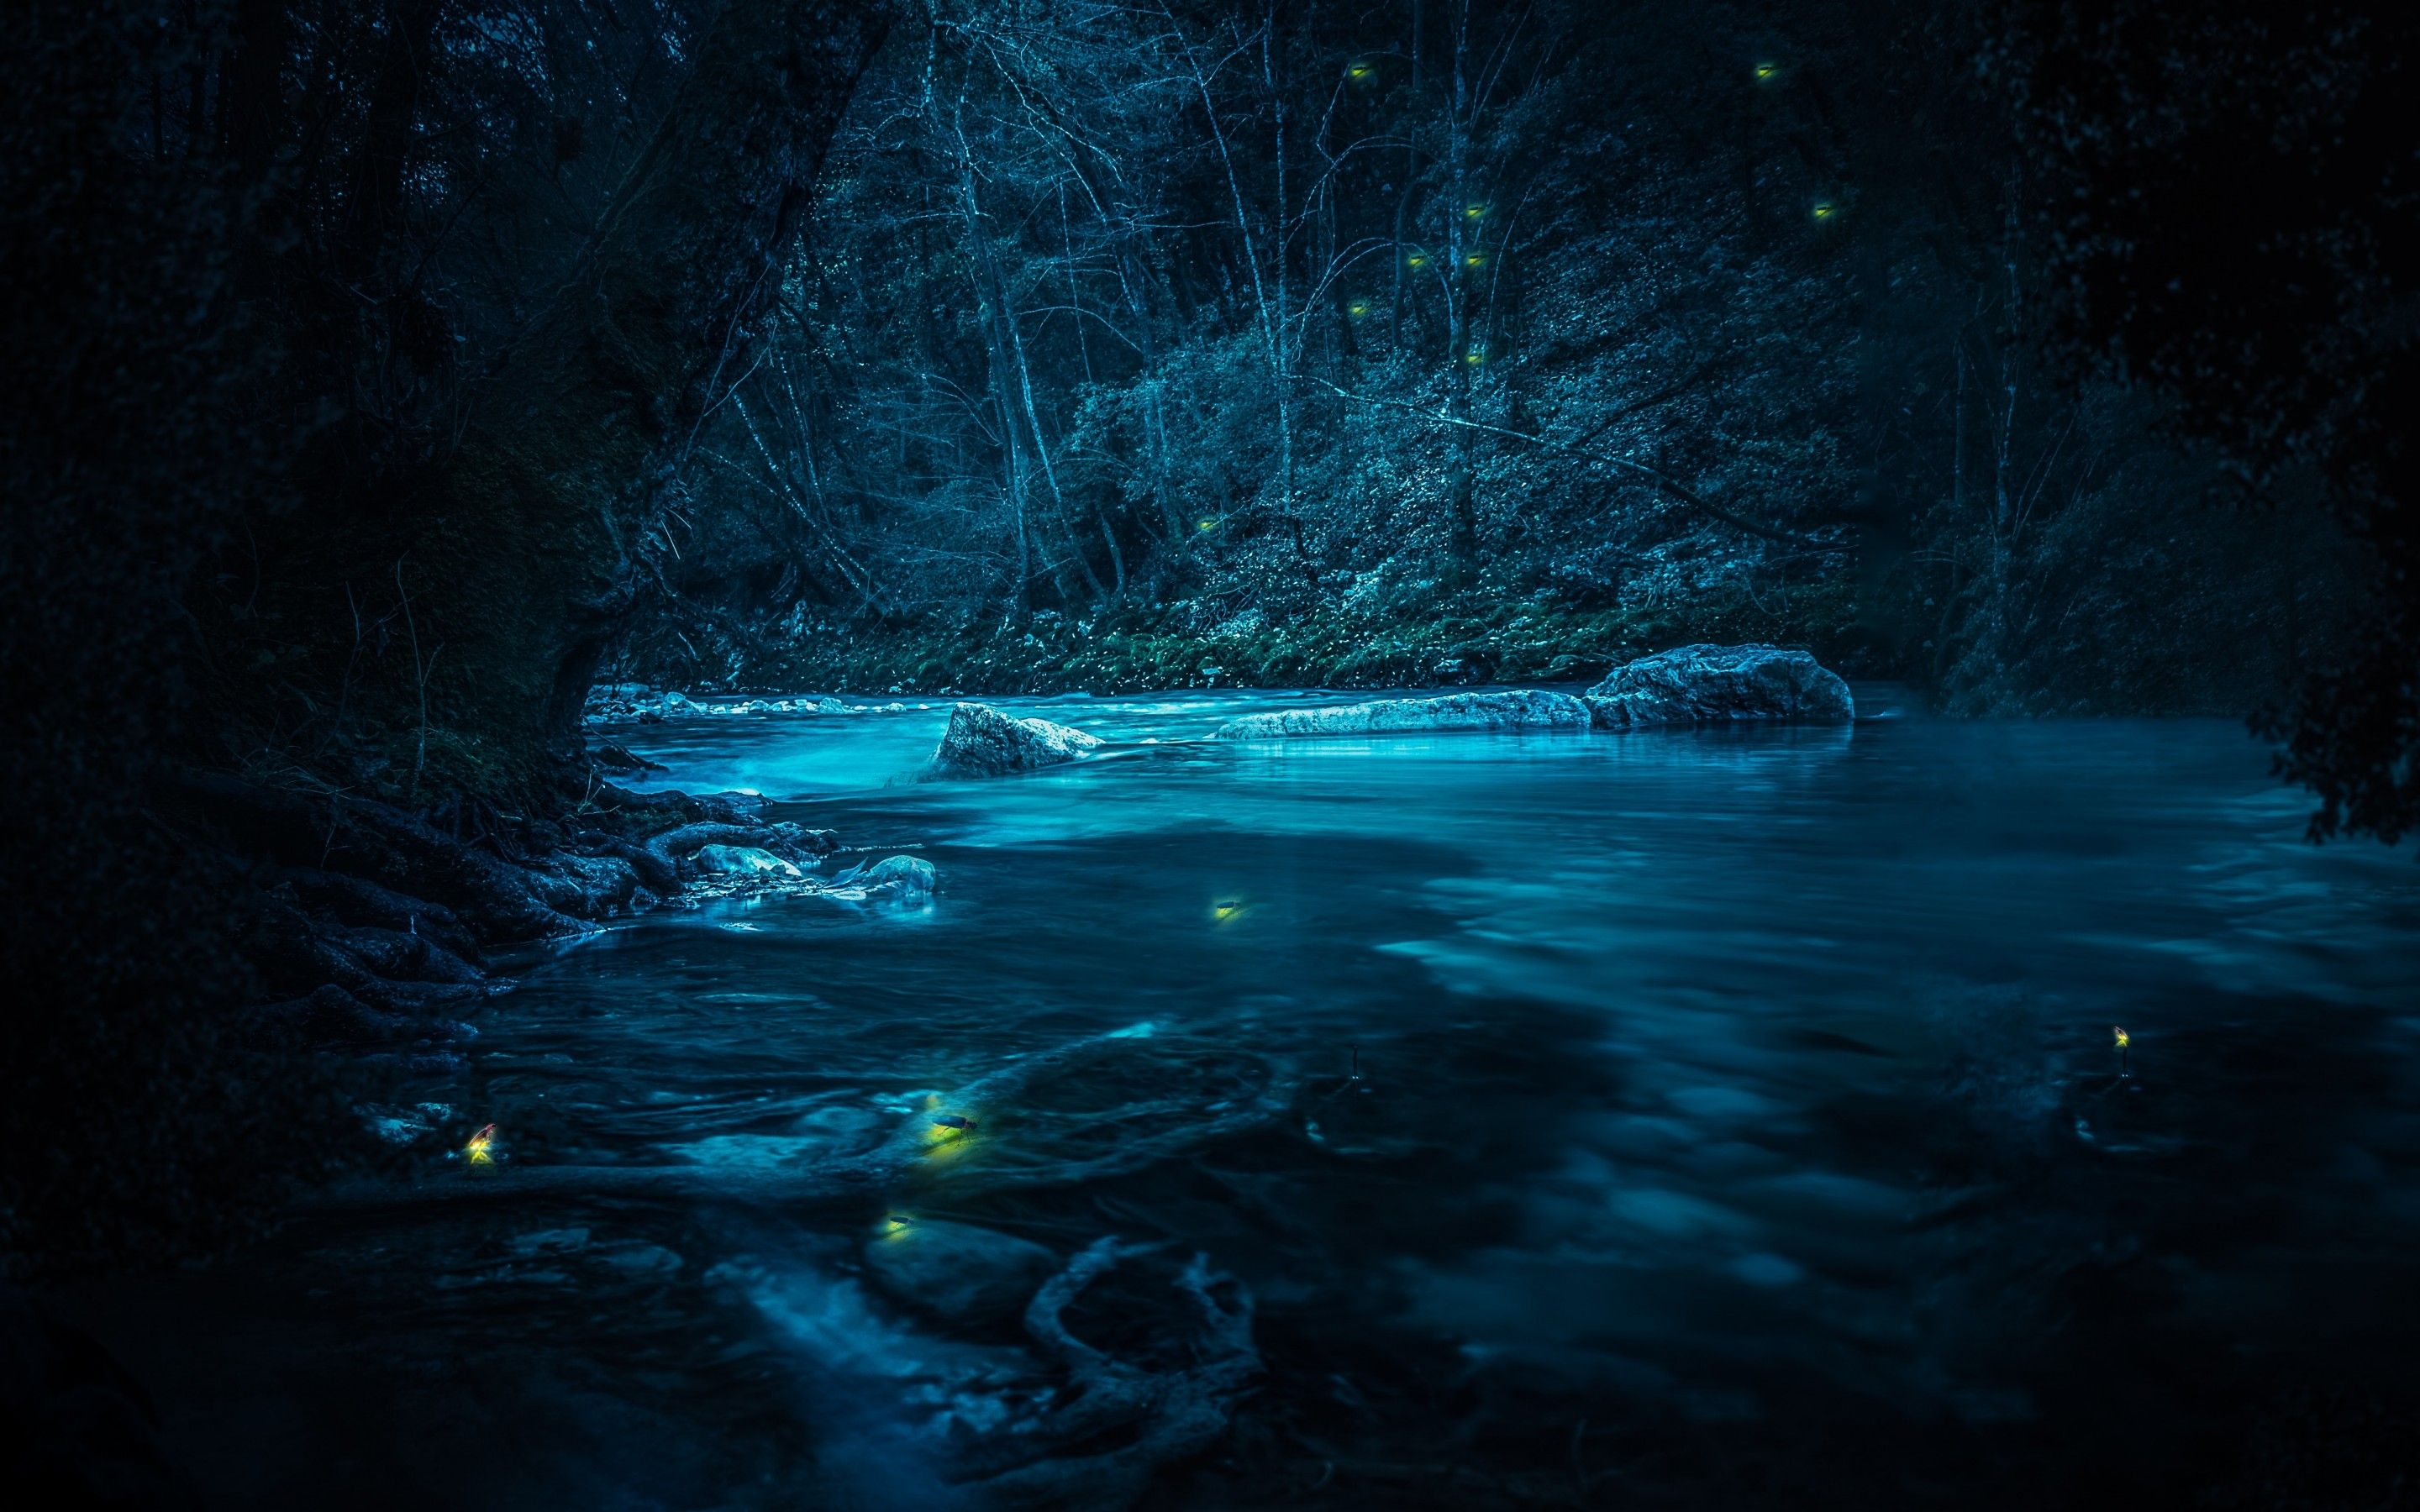 Forest 4K Wallpaper, River, Night, Dark, Magical, Crescent Moon, Blue, Fairies, Nature